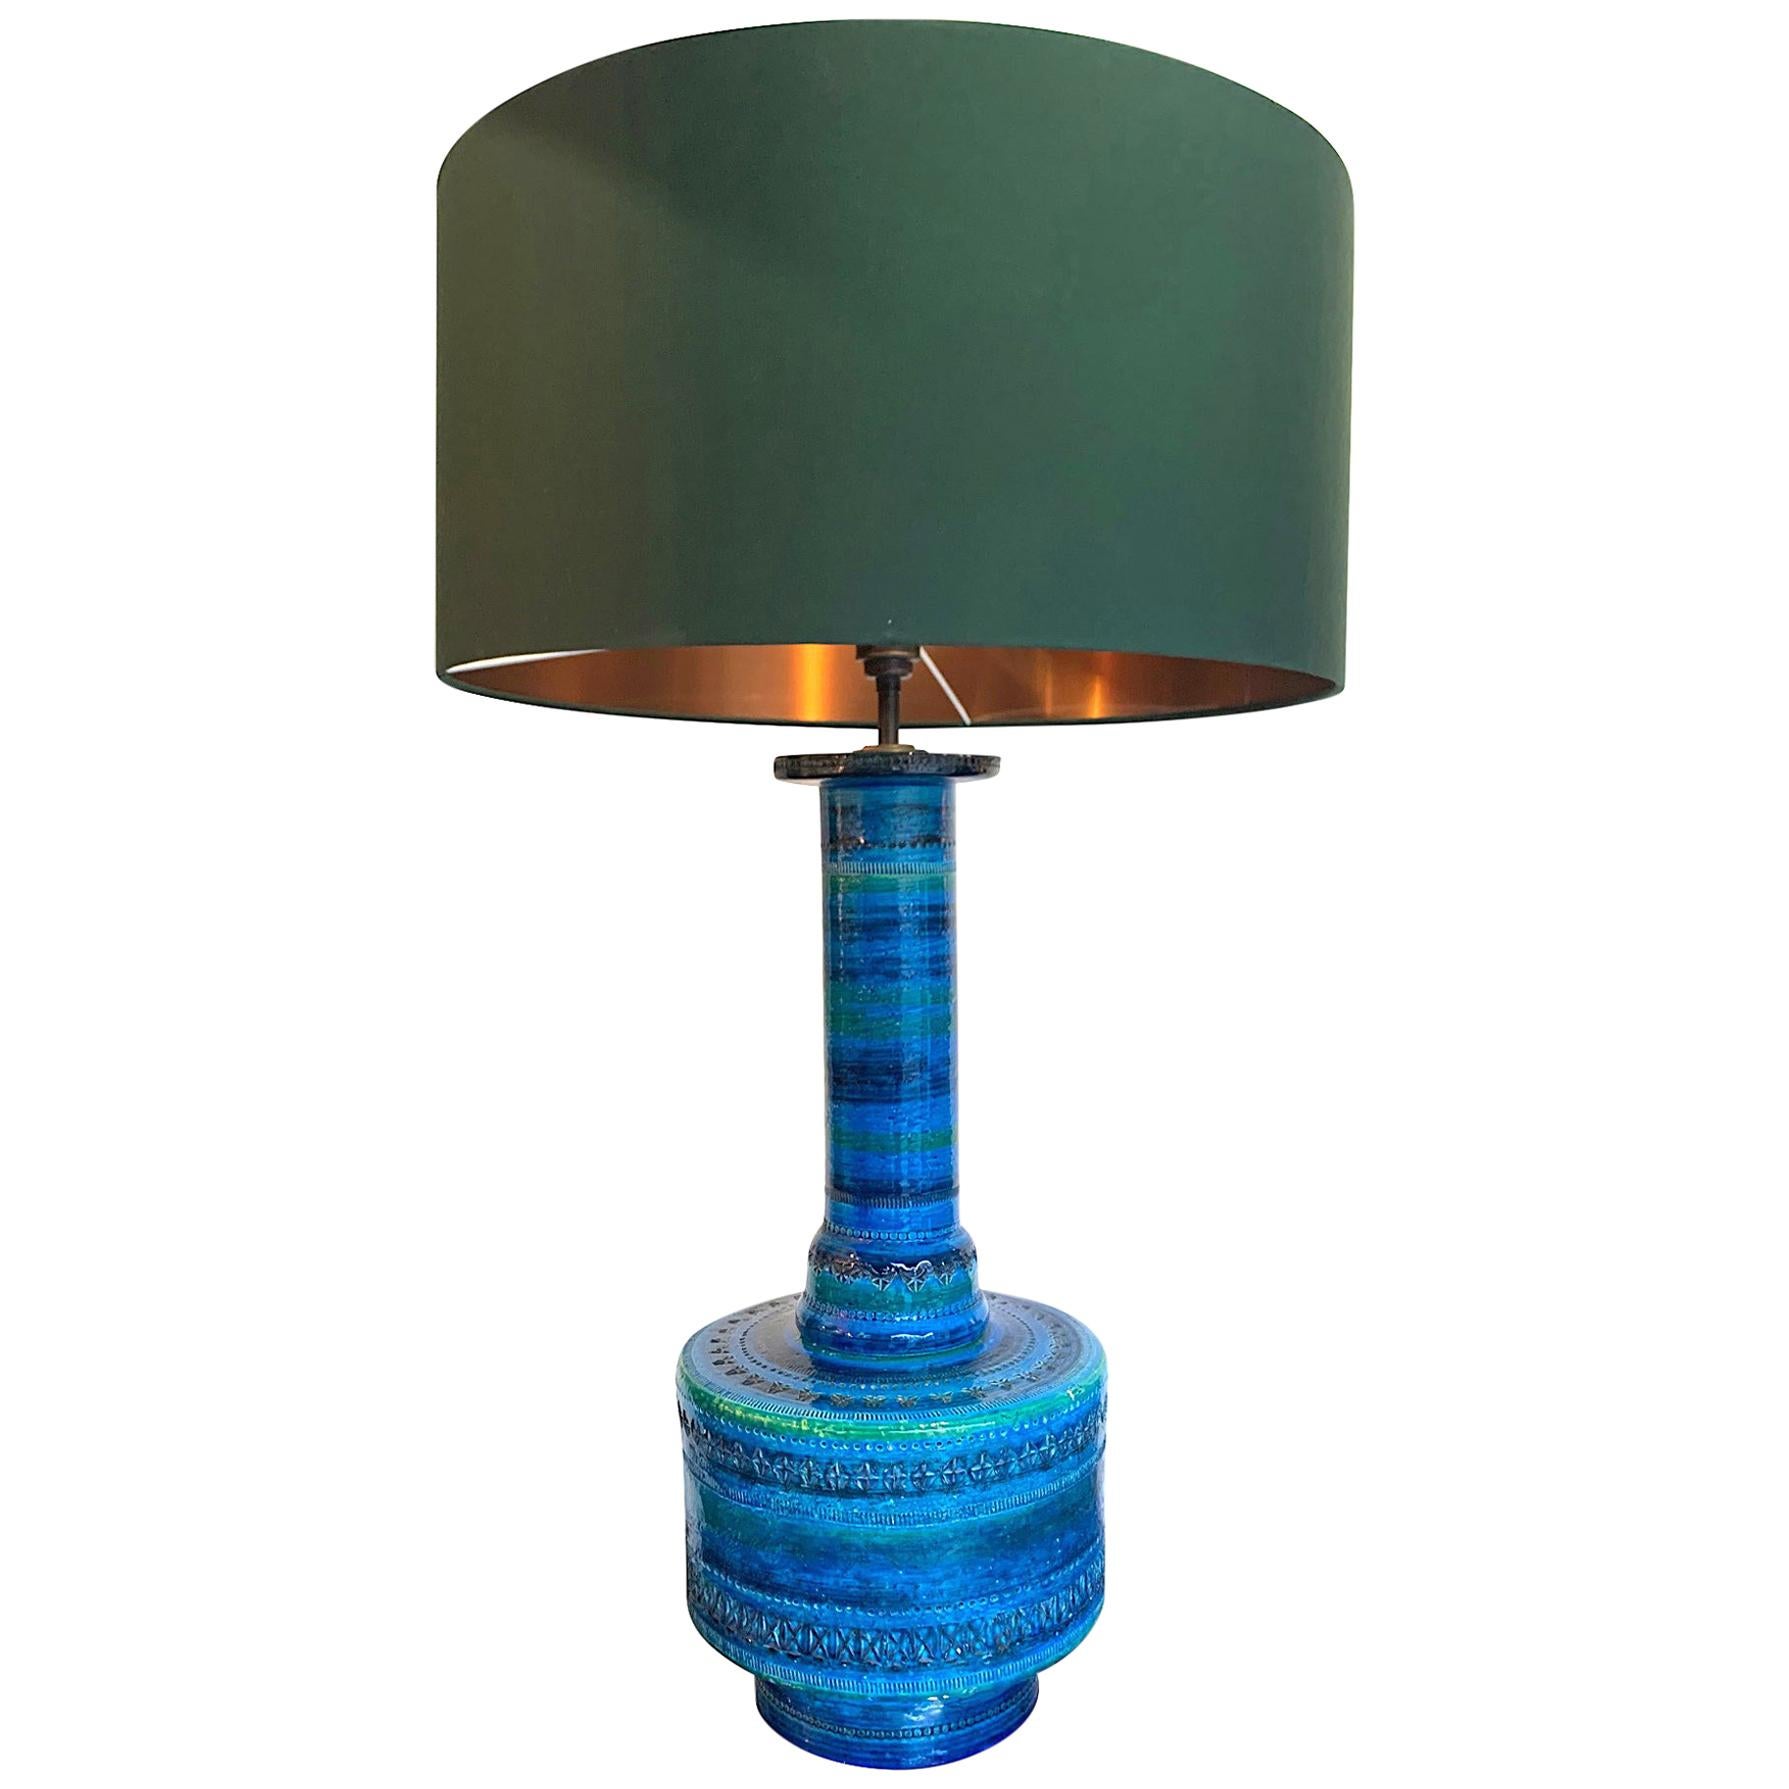 Large and Rare 1960s Ceramic Bitossi "Rimini Blue" Lamp Designed by Aldo Londi